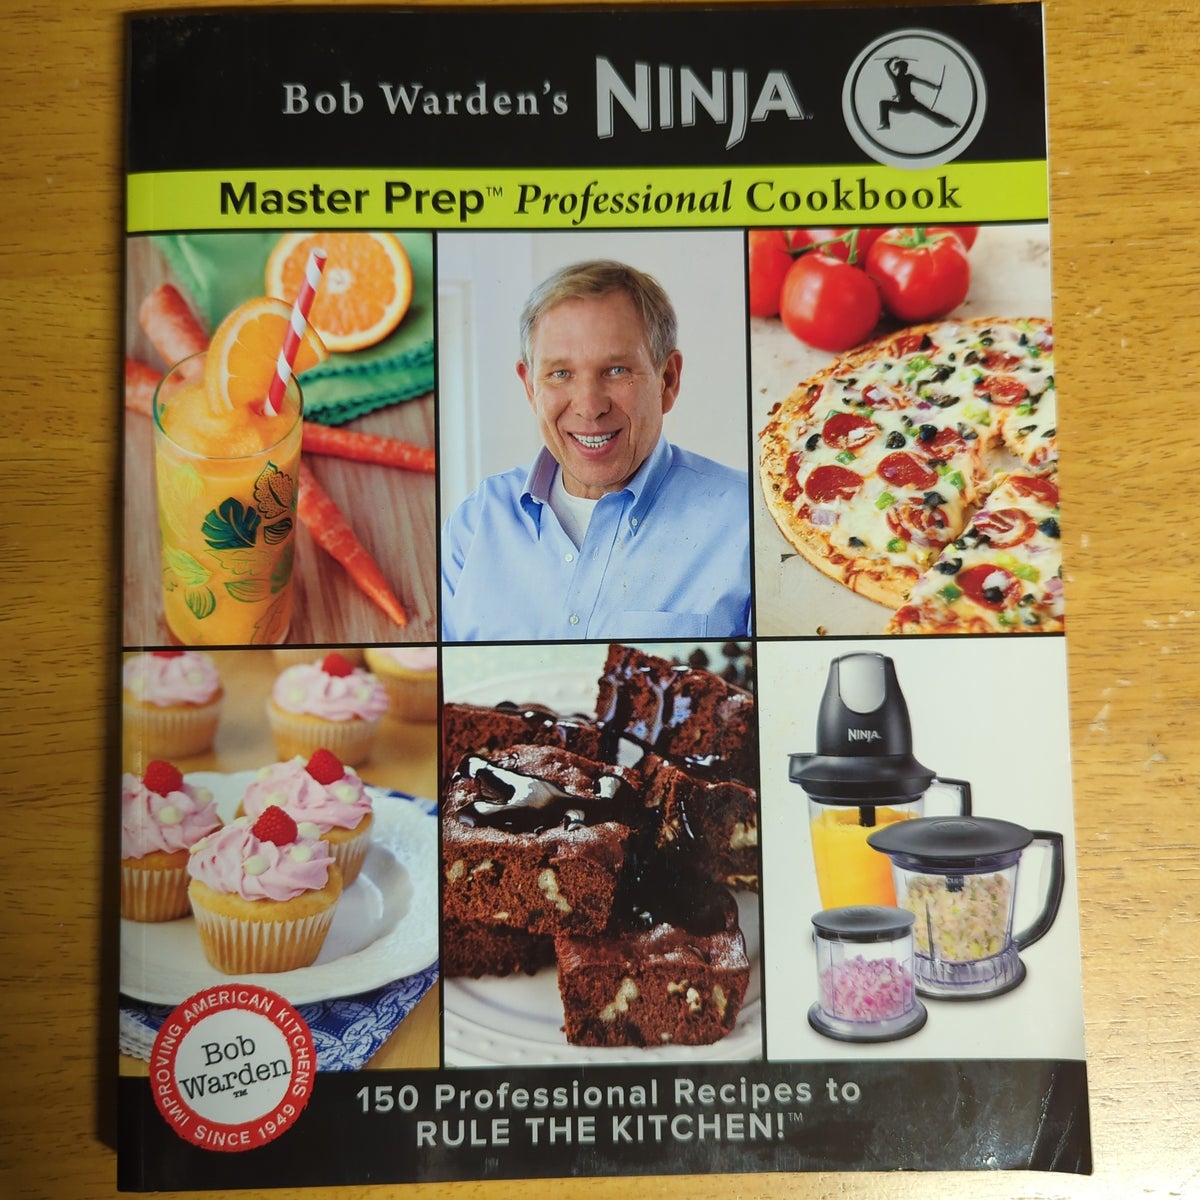 Bob Warden's Ninja master prep professional cookbook by Bob Warden,  Paperback